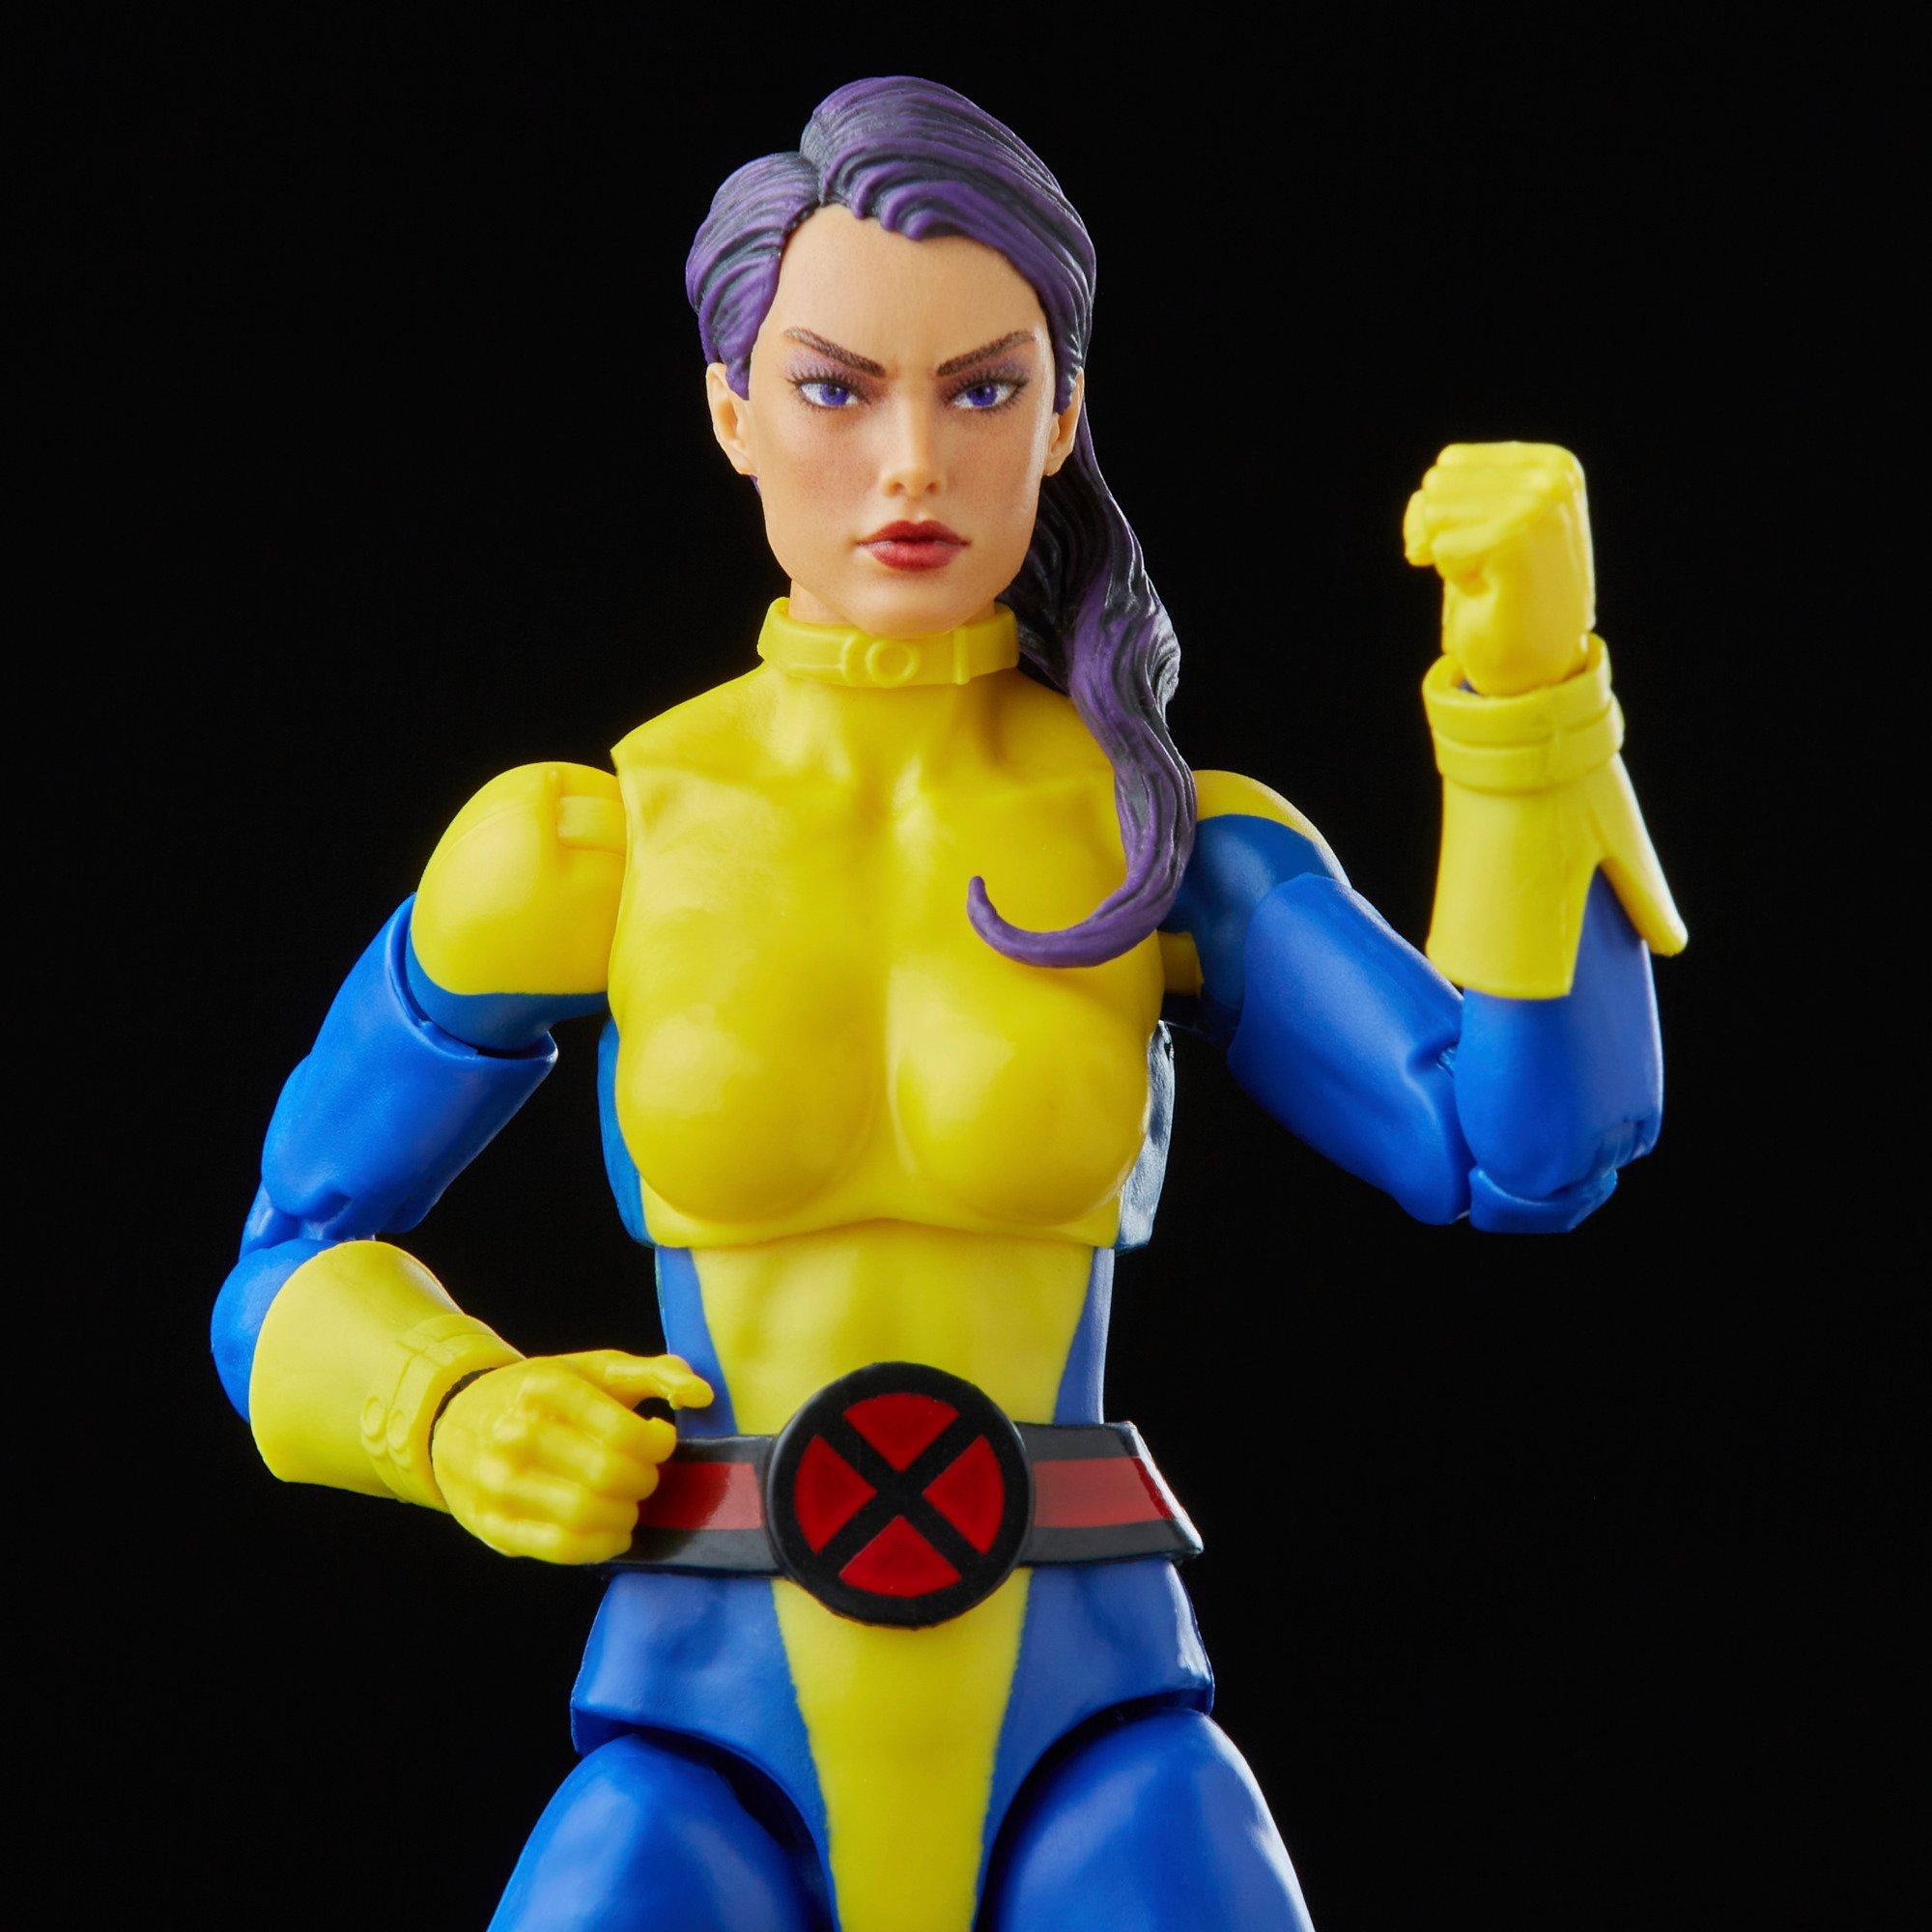 Hasbro Marvel Legends Series X-Men 6-in Action Figure Set 3-Pack - Gambit,  Marvel's Banshee, Psylocke